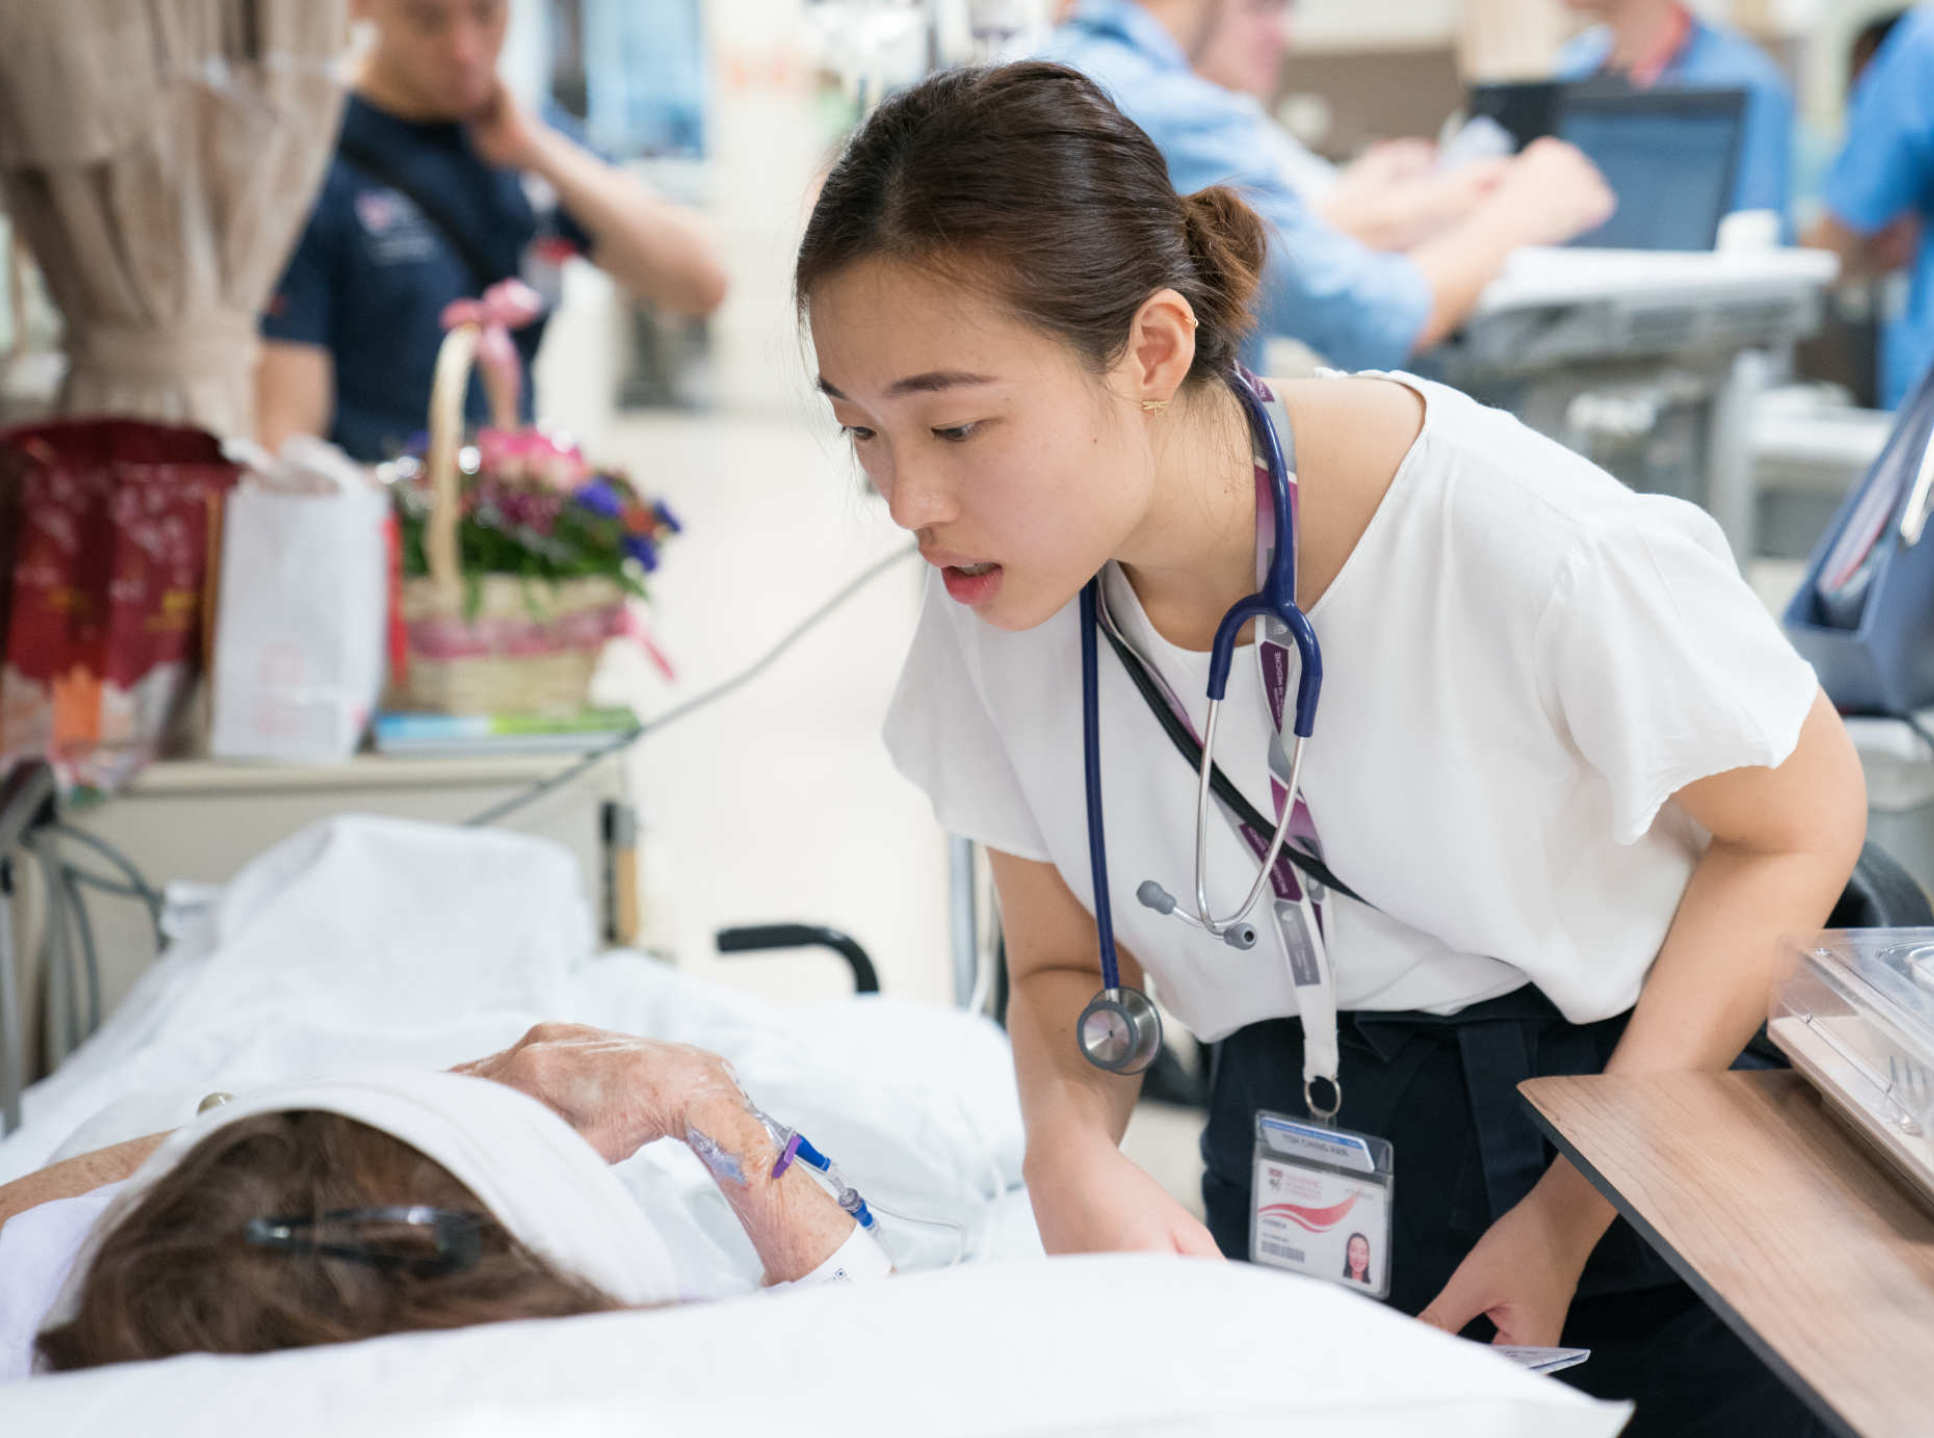 LKCMedicine graduate Ching Han checks on a patient